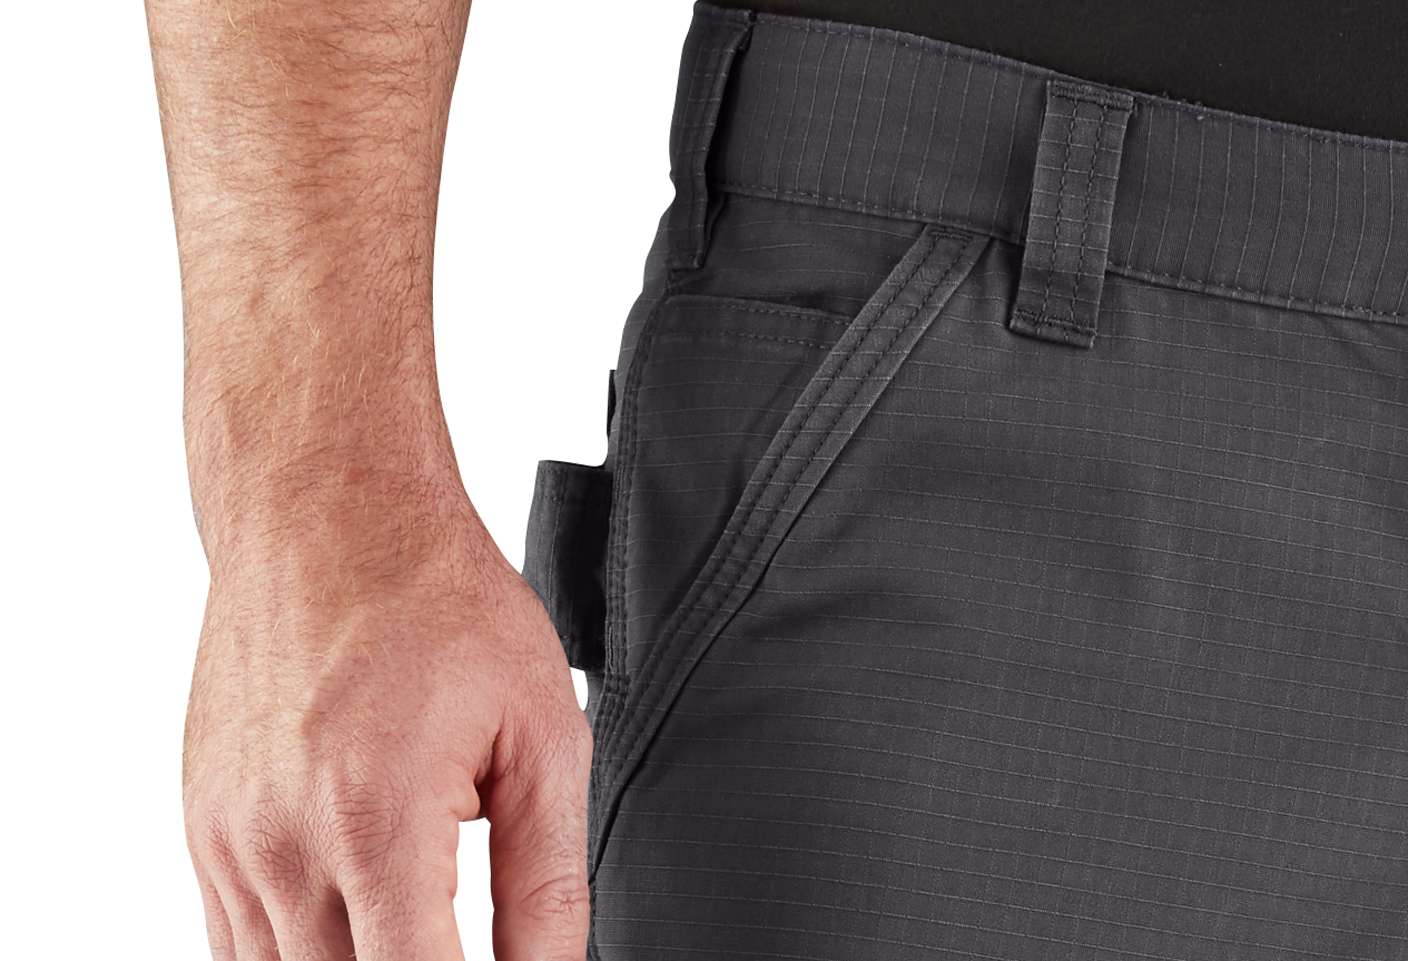 Convenient side drop-in pocket keeps gear accessible